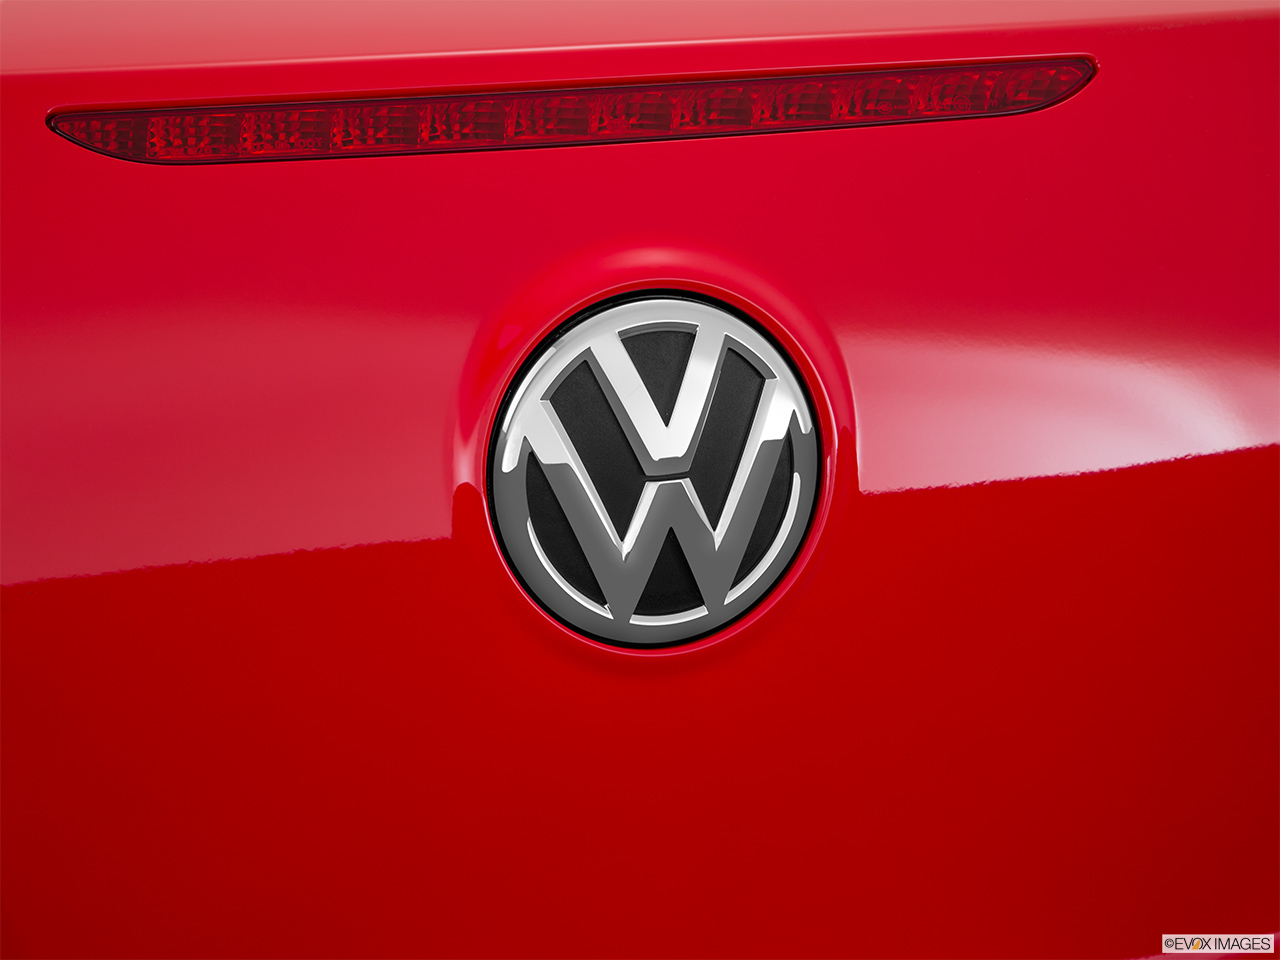 2016 Volkswagen Eos Komfort Edition Rear manufacture badge/emblem 